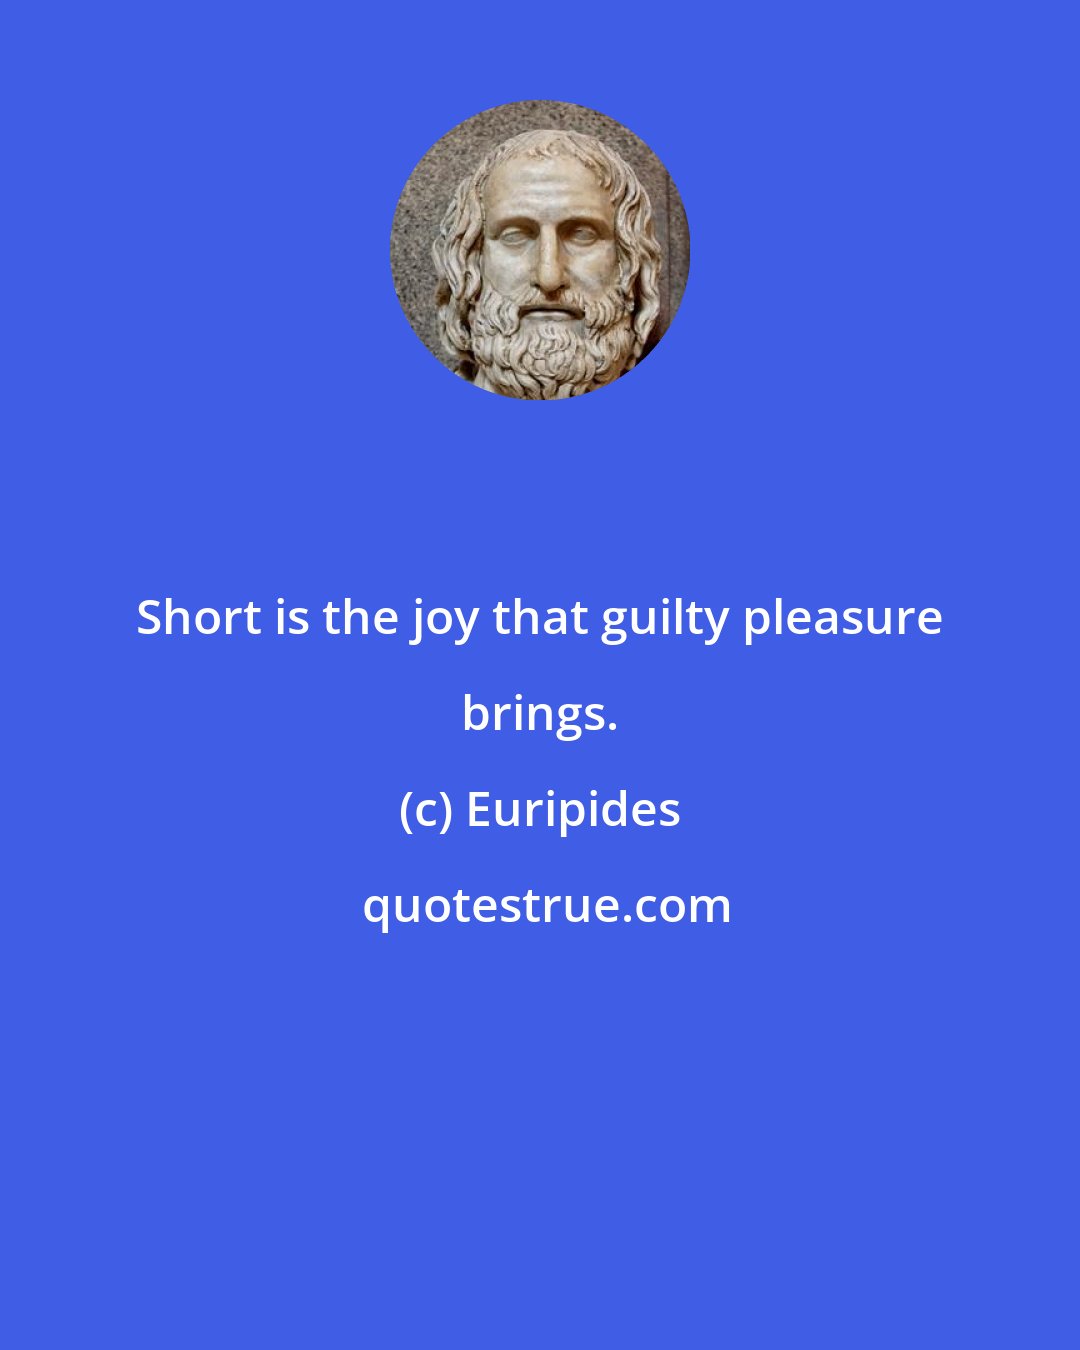 Euripides: Short is the joy that guilty pleasure brings.